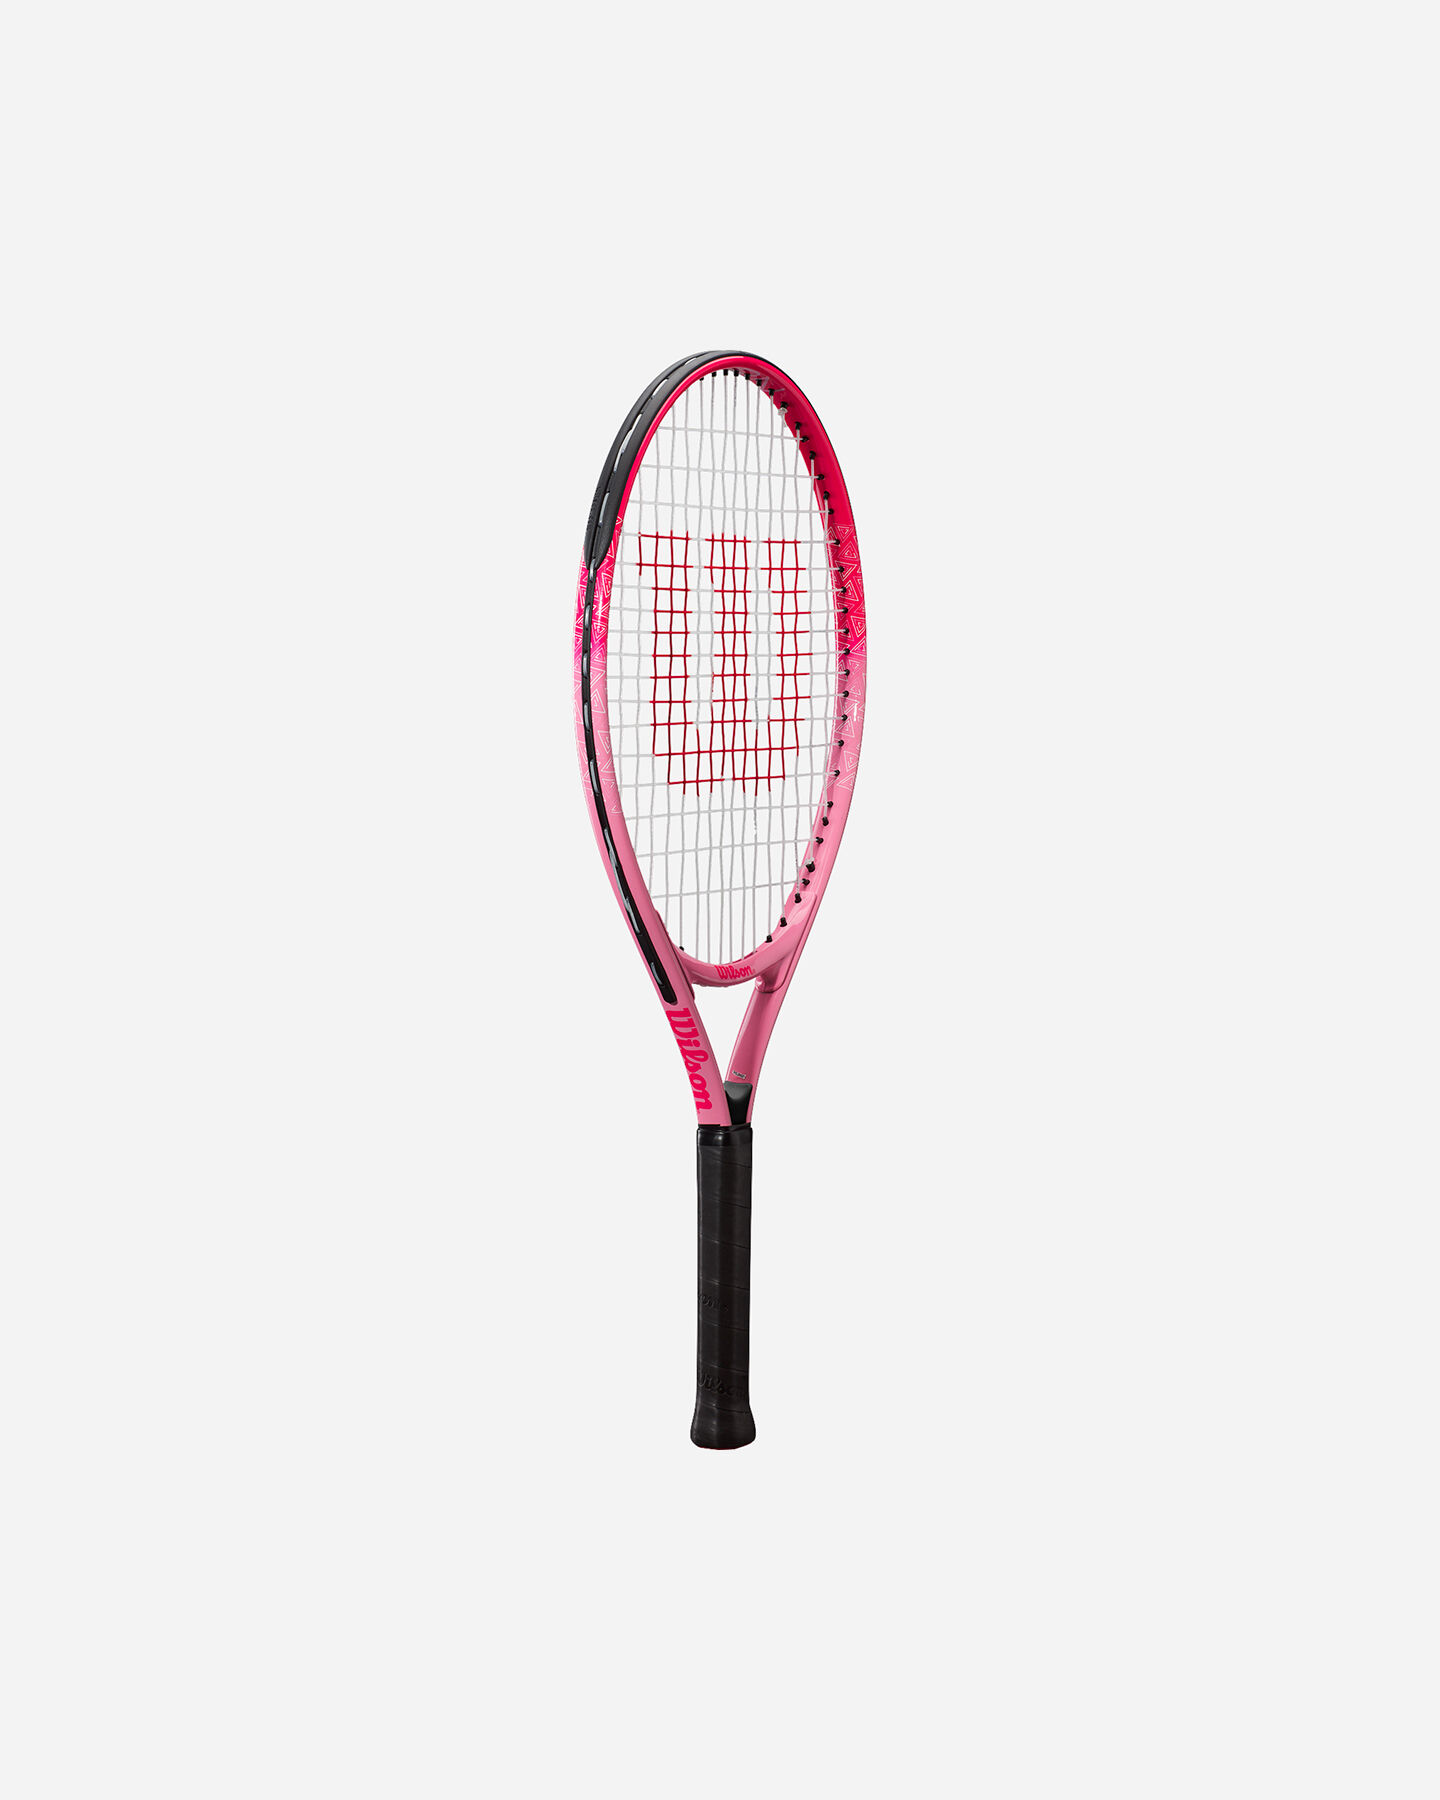  Racchetta tennis WILSON BURN PINK 23 JR S5344157|UNI|23 scatto 1